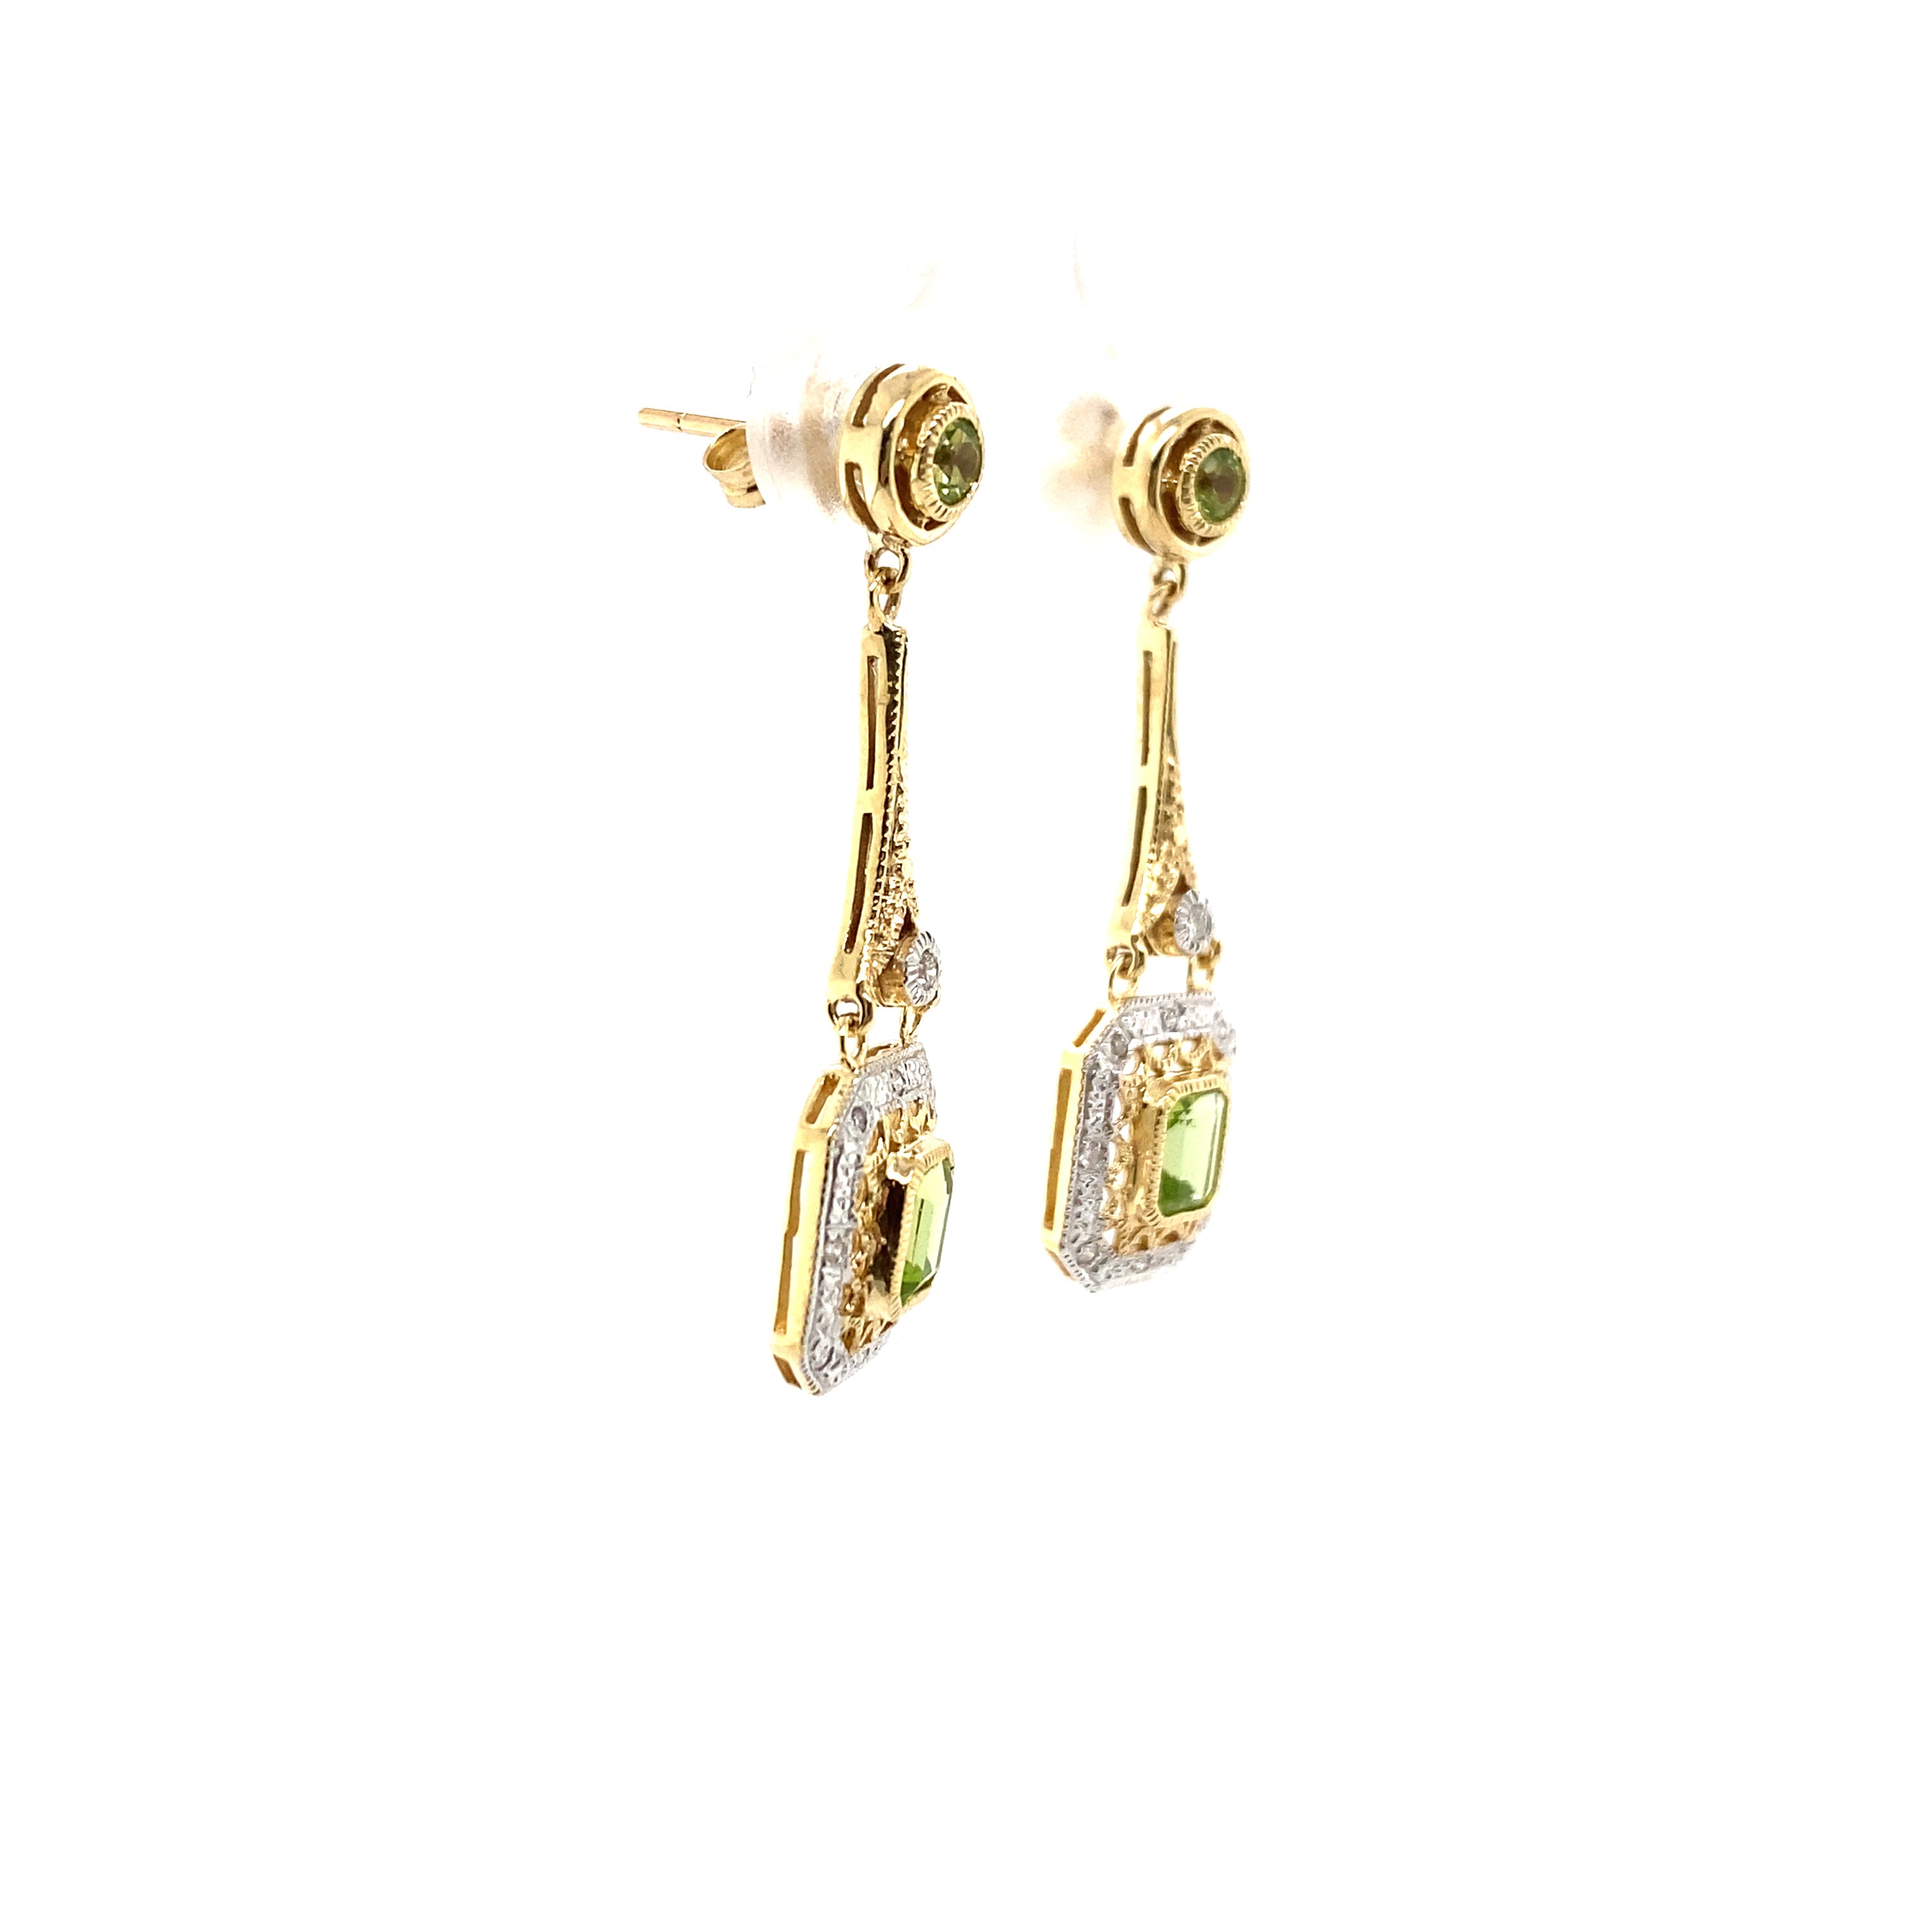 9ct yellow gold peridot and diamond earrings.